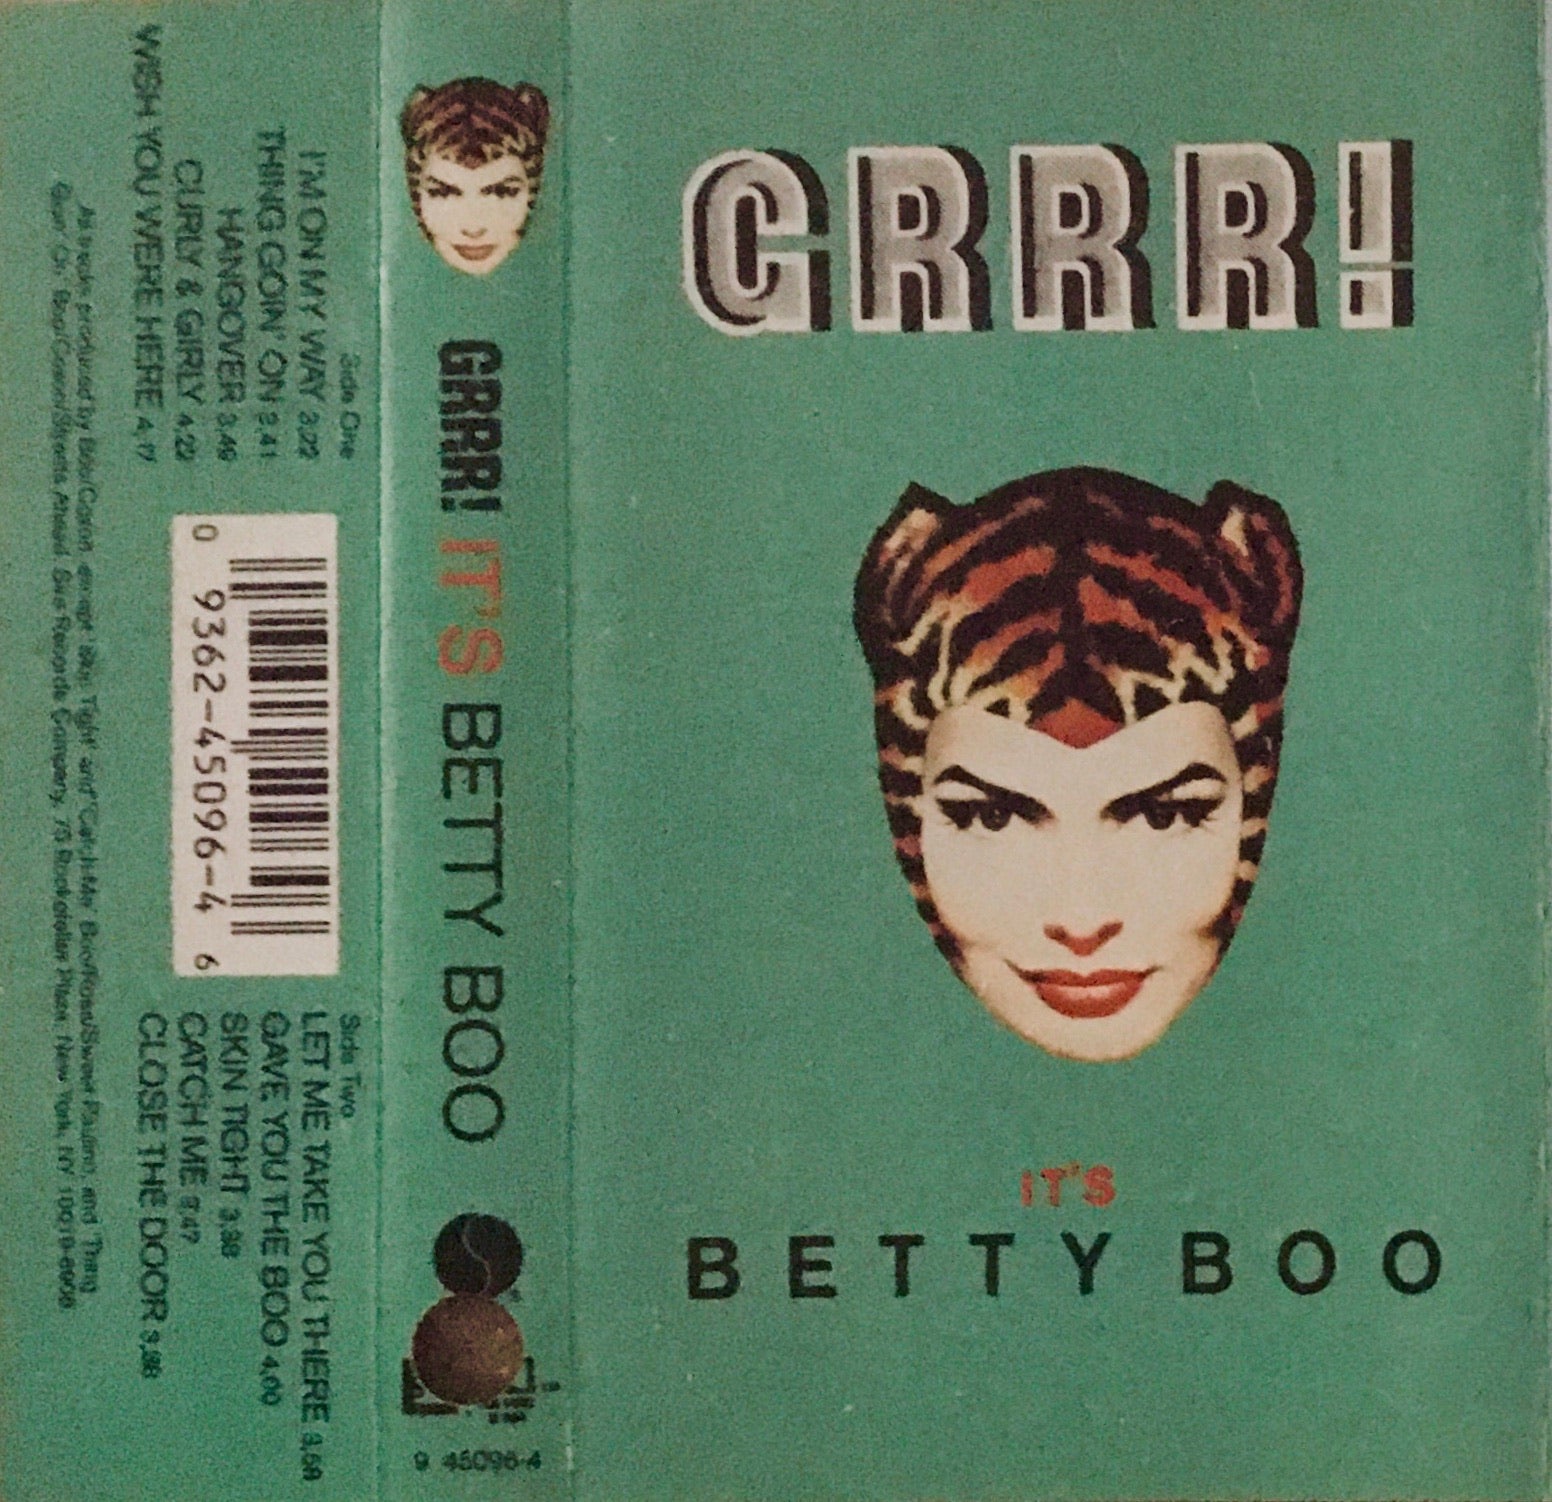 Betty Boo “Grrr! It’s Betty Boo” CS (1992)